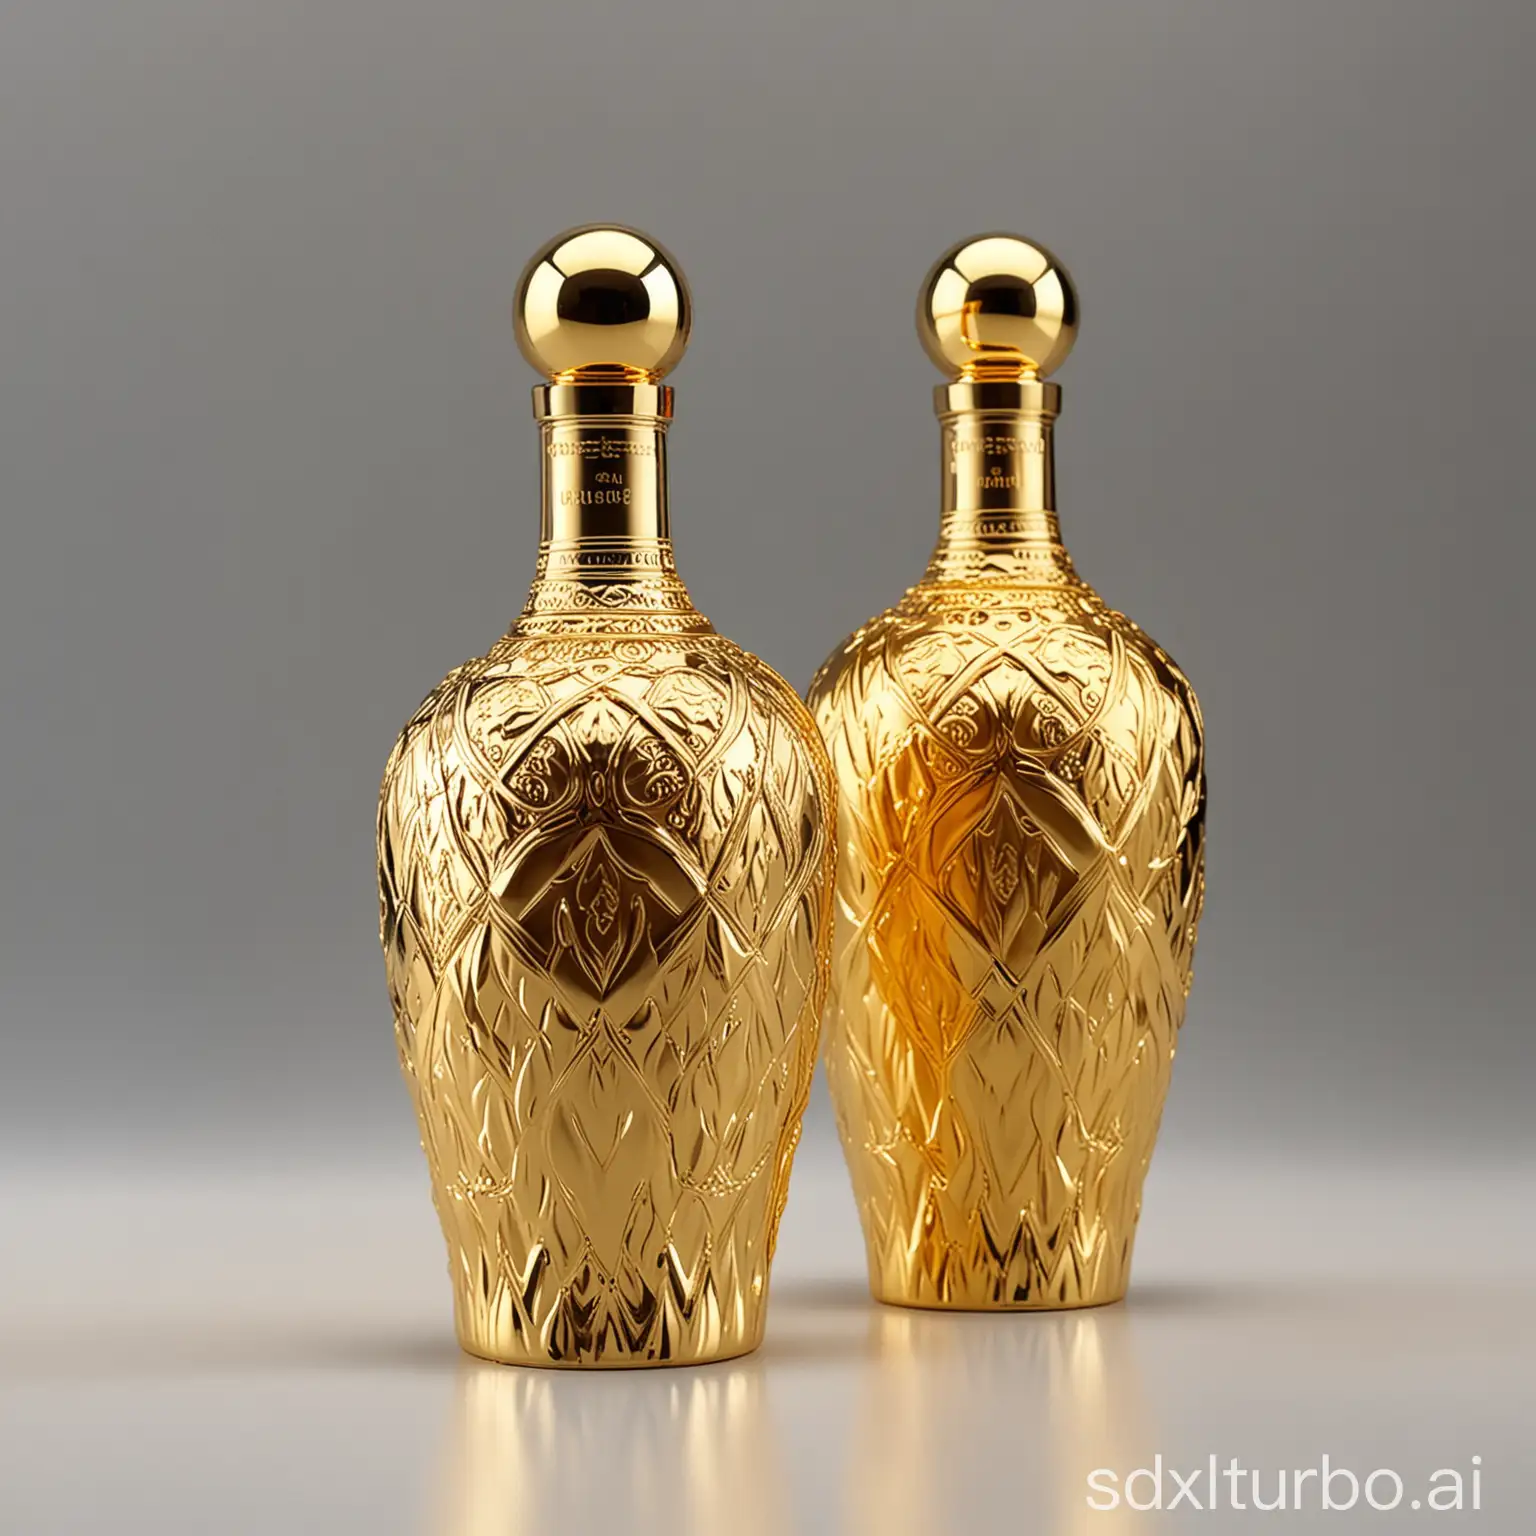 Elegant-Golden-Luxury-Perfume-Bottle-on-Ornate-Background